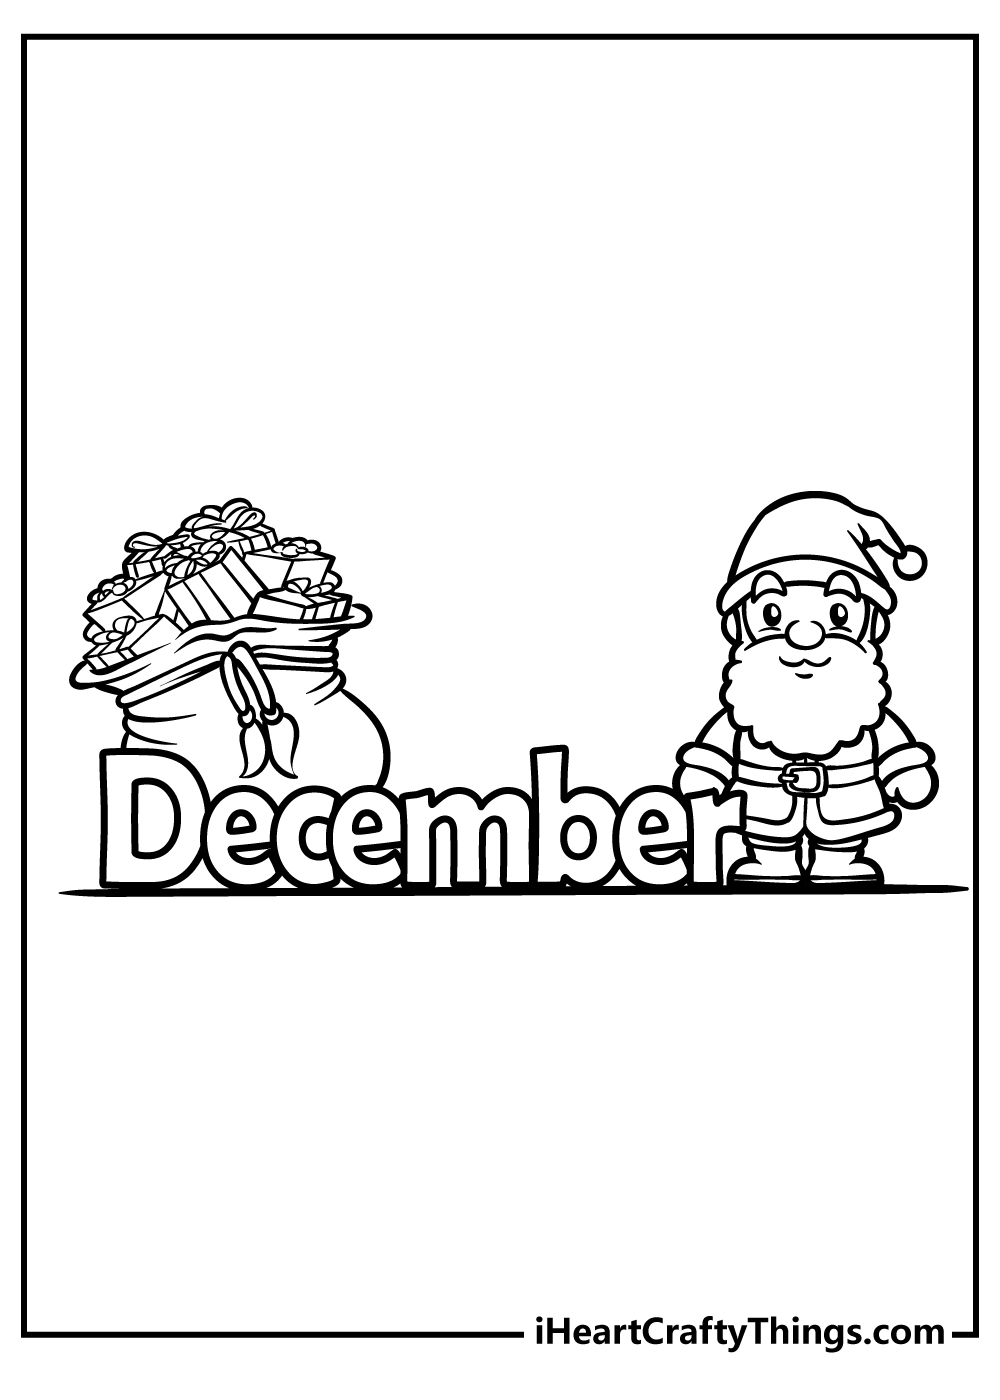 December Coloring Original Sheet for children free download